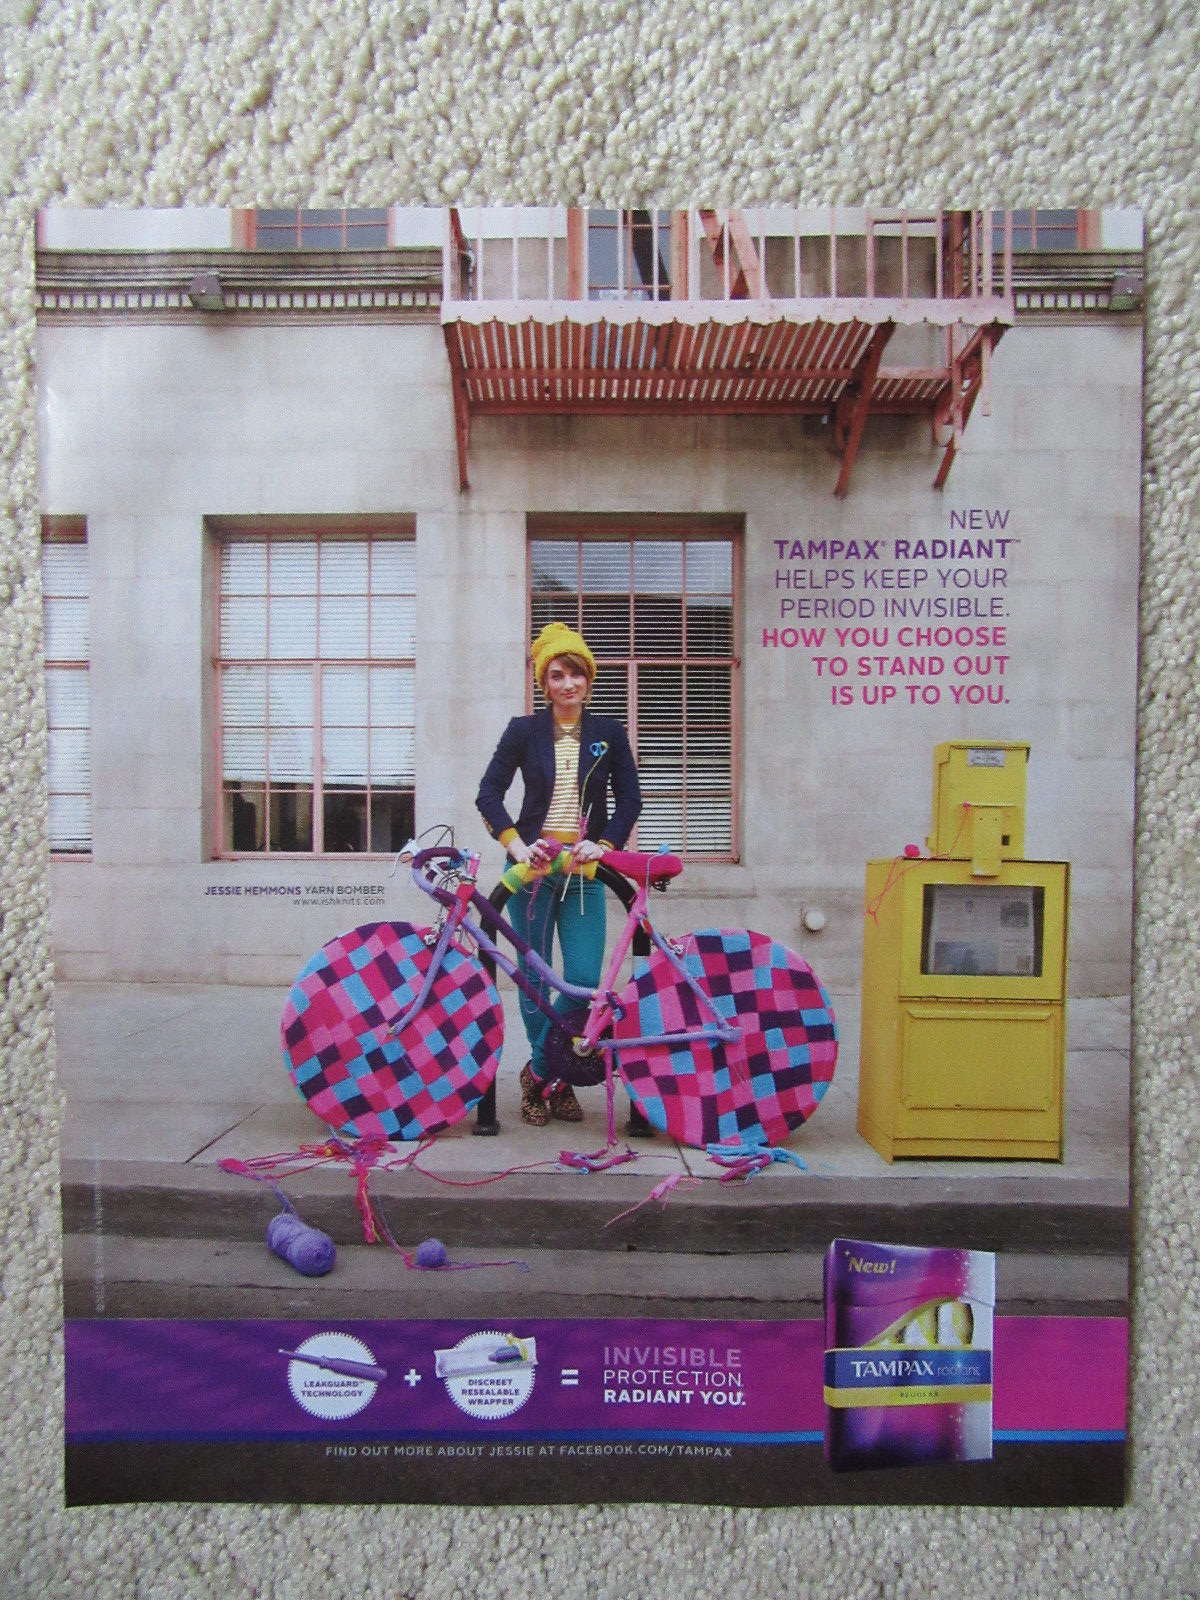 2012 Advertising, Jessie Hemmons, Yarn Bombing, Artist, Tampax Radiant